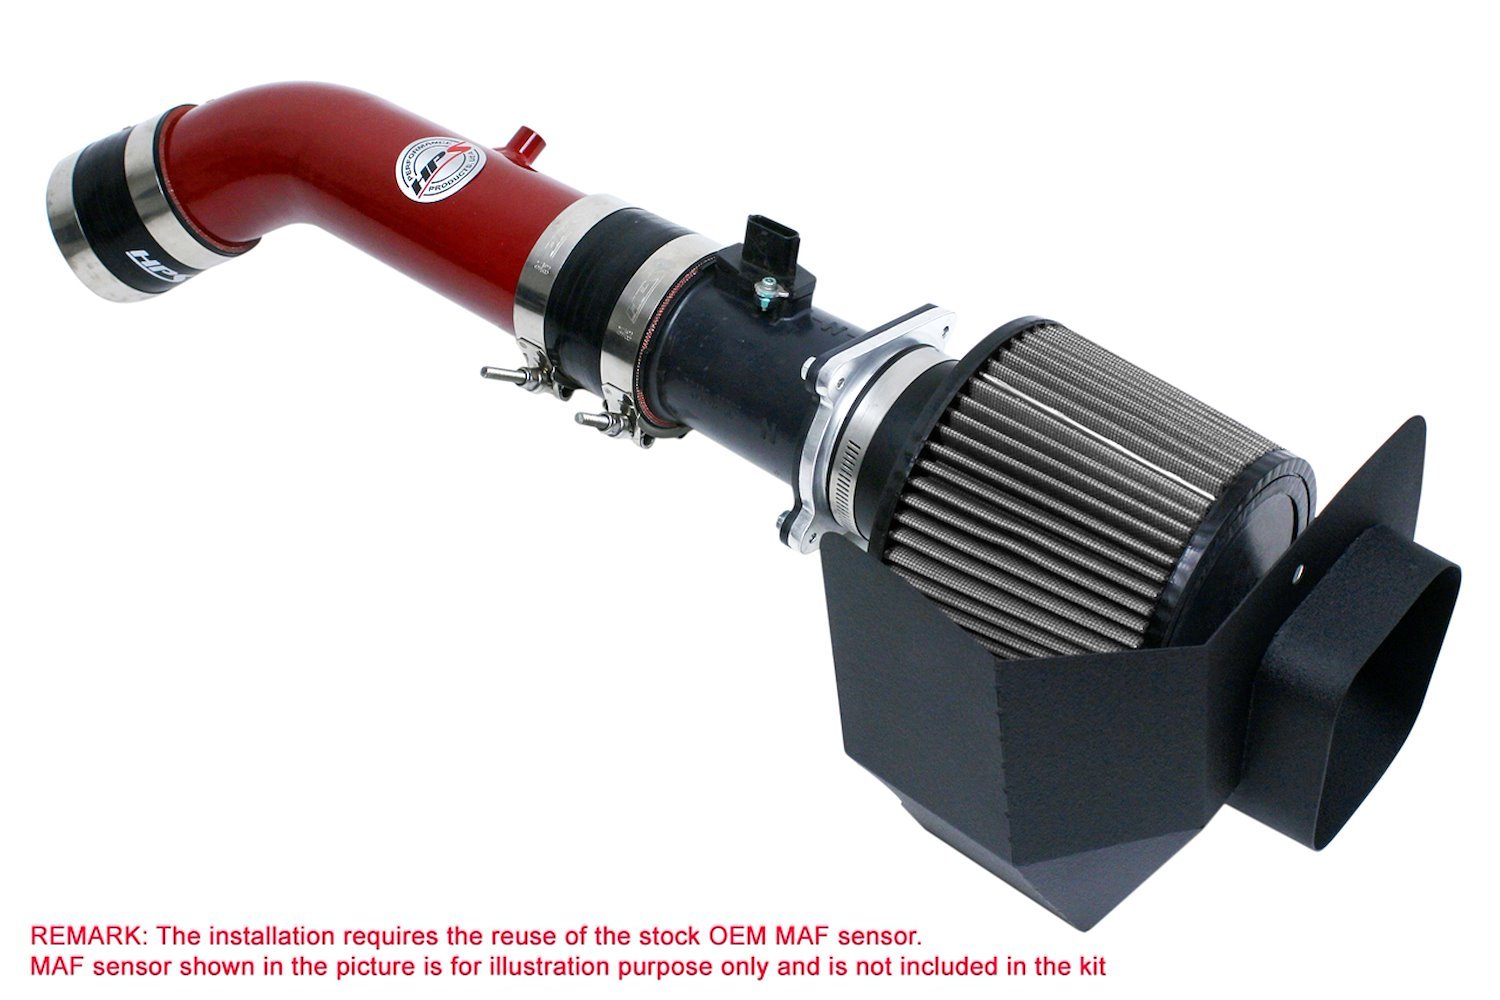 827-520R Air Intake Kit, Dyno Proven +10 HP, +9.8 TQ, Heat Shield, High-Flow Air Filter